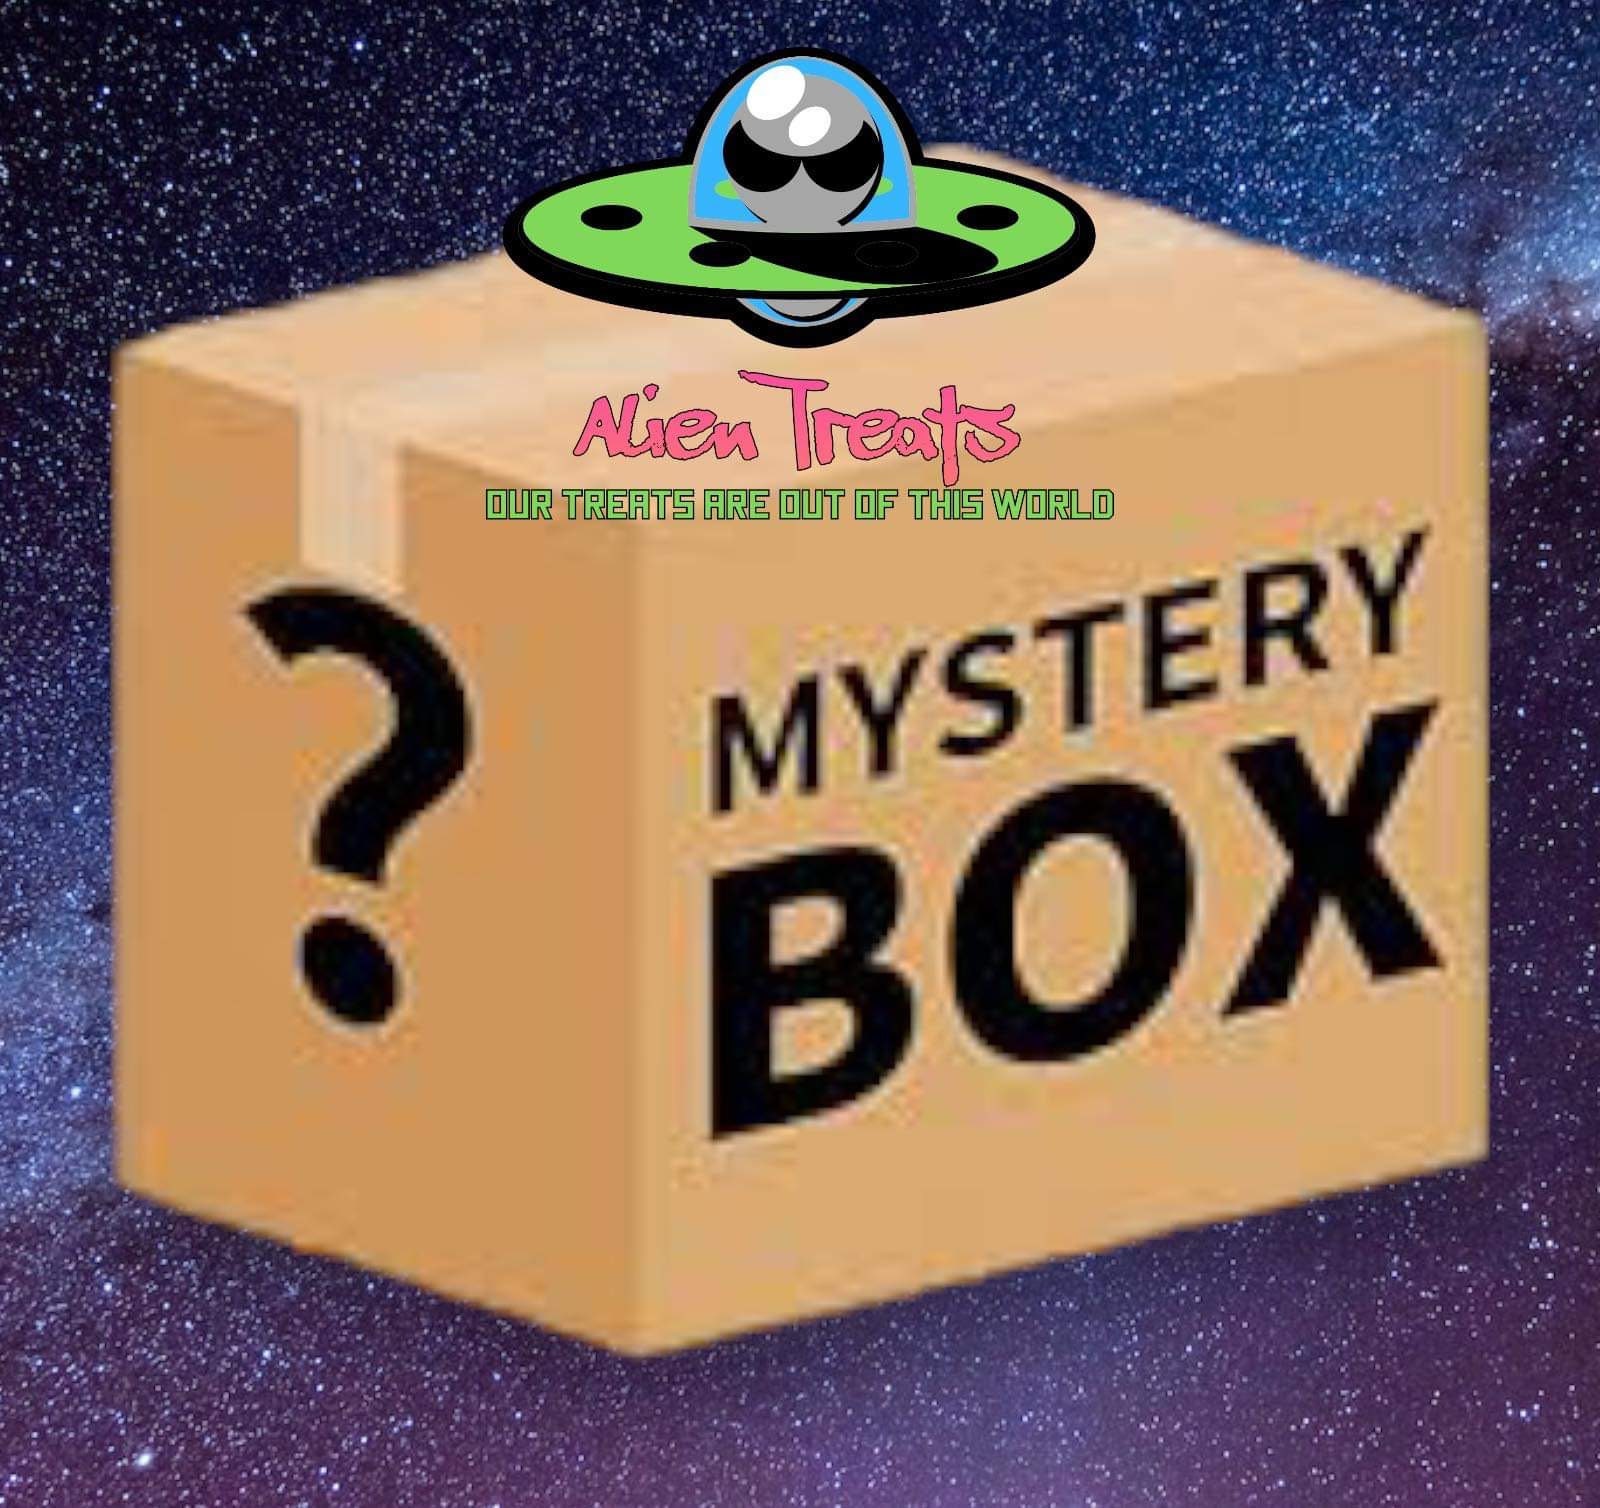 Ultra Light Mystery-Box 25€